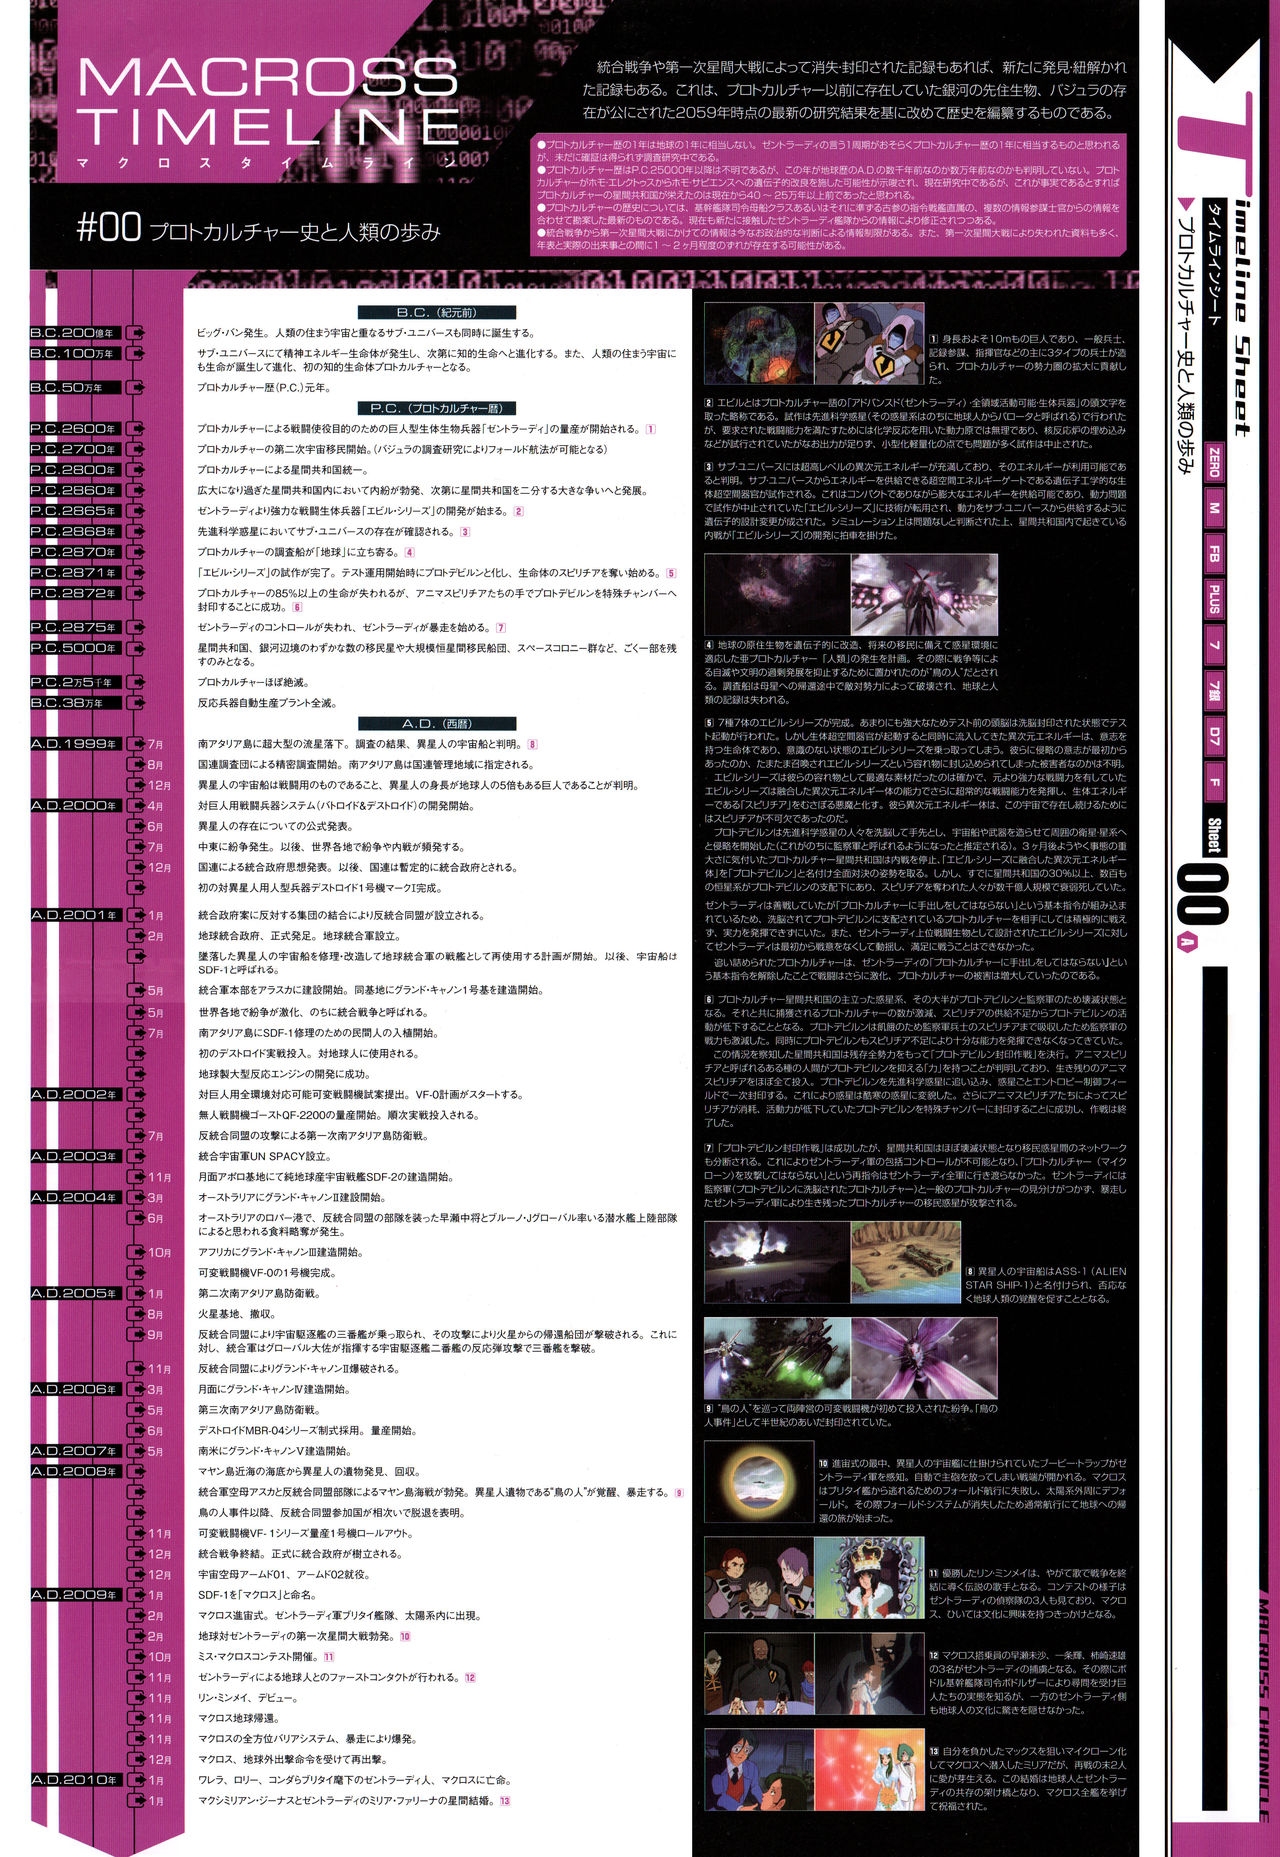 Macross Chronicle - 30th Anniversary (07/13) - Timeline Sheet 2